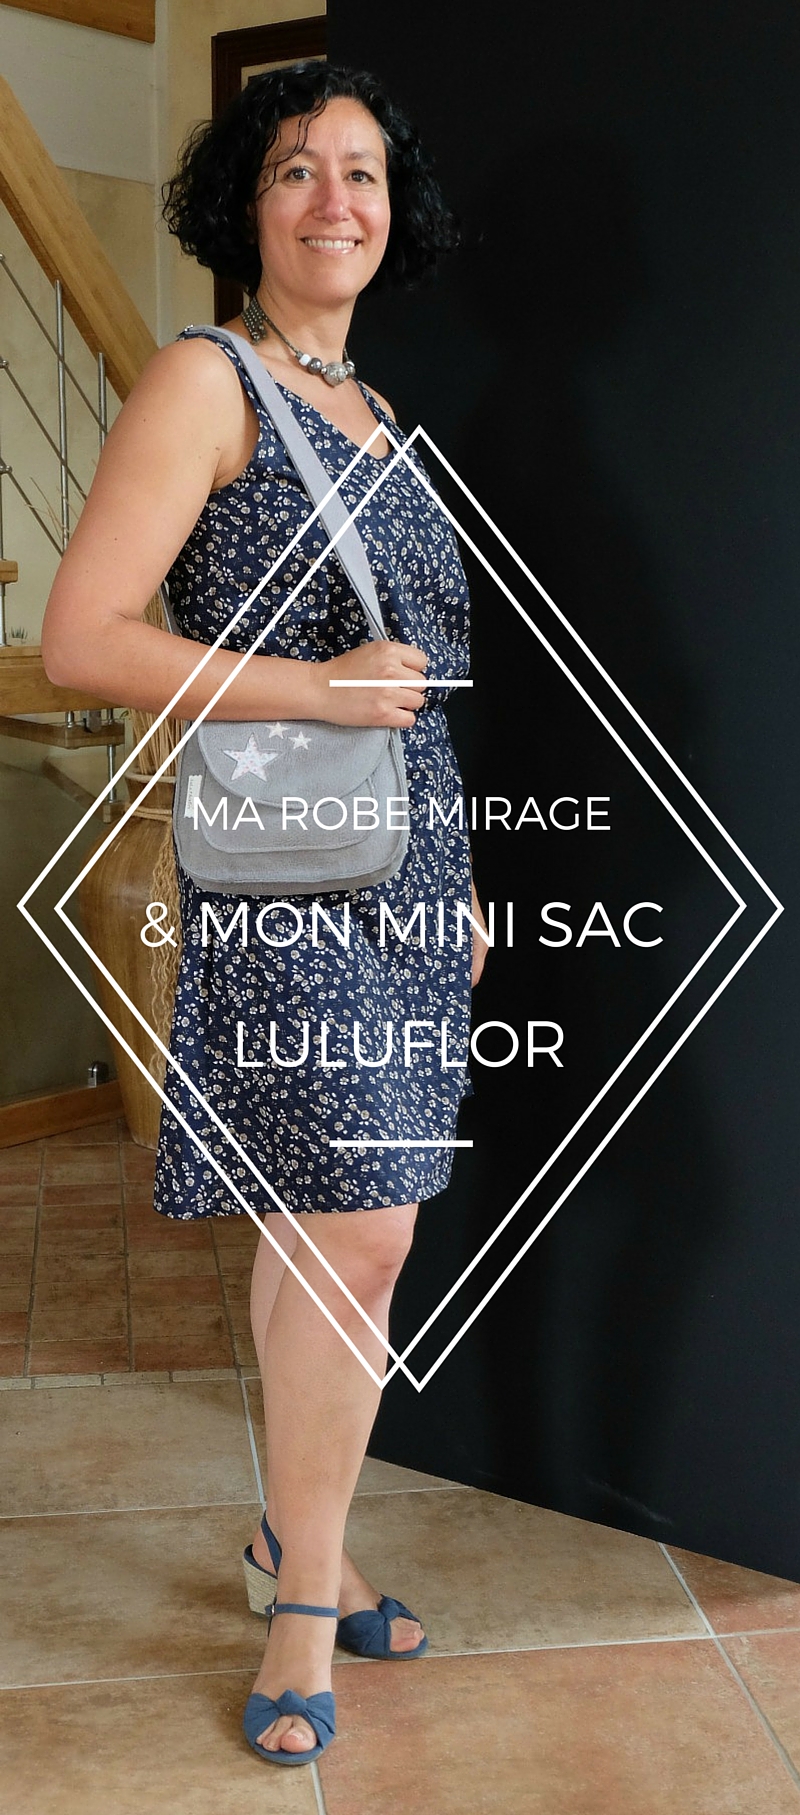 MA ROBE MIRAGE et mon mini sac luluflor-lulu factory